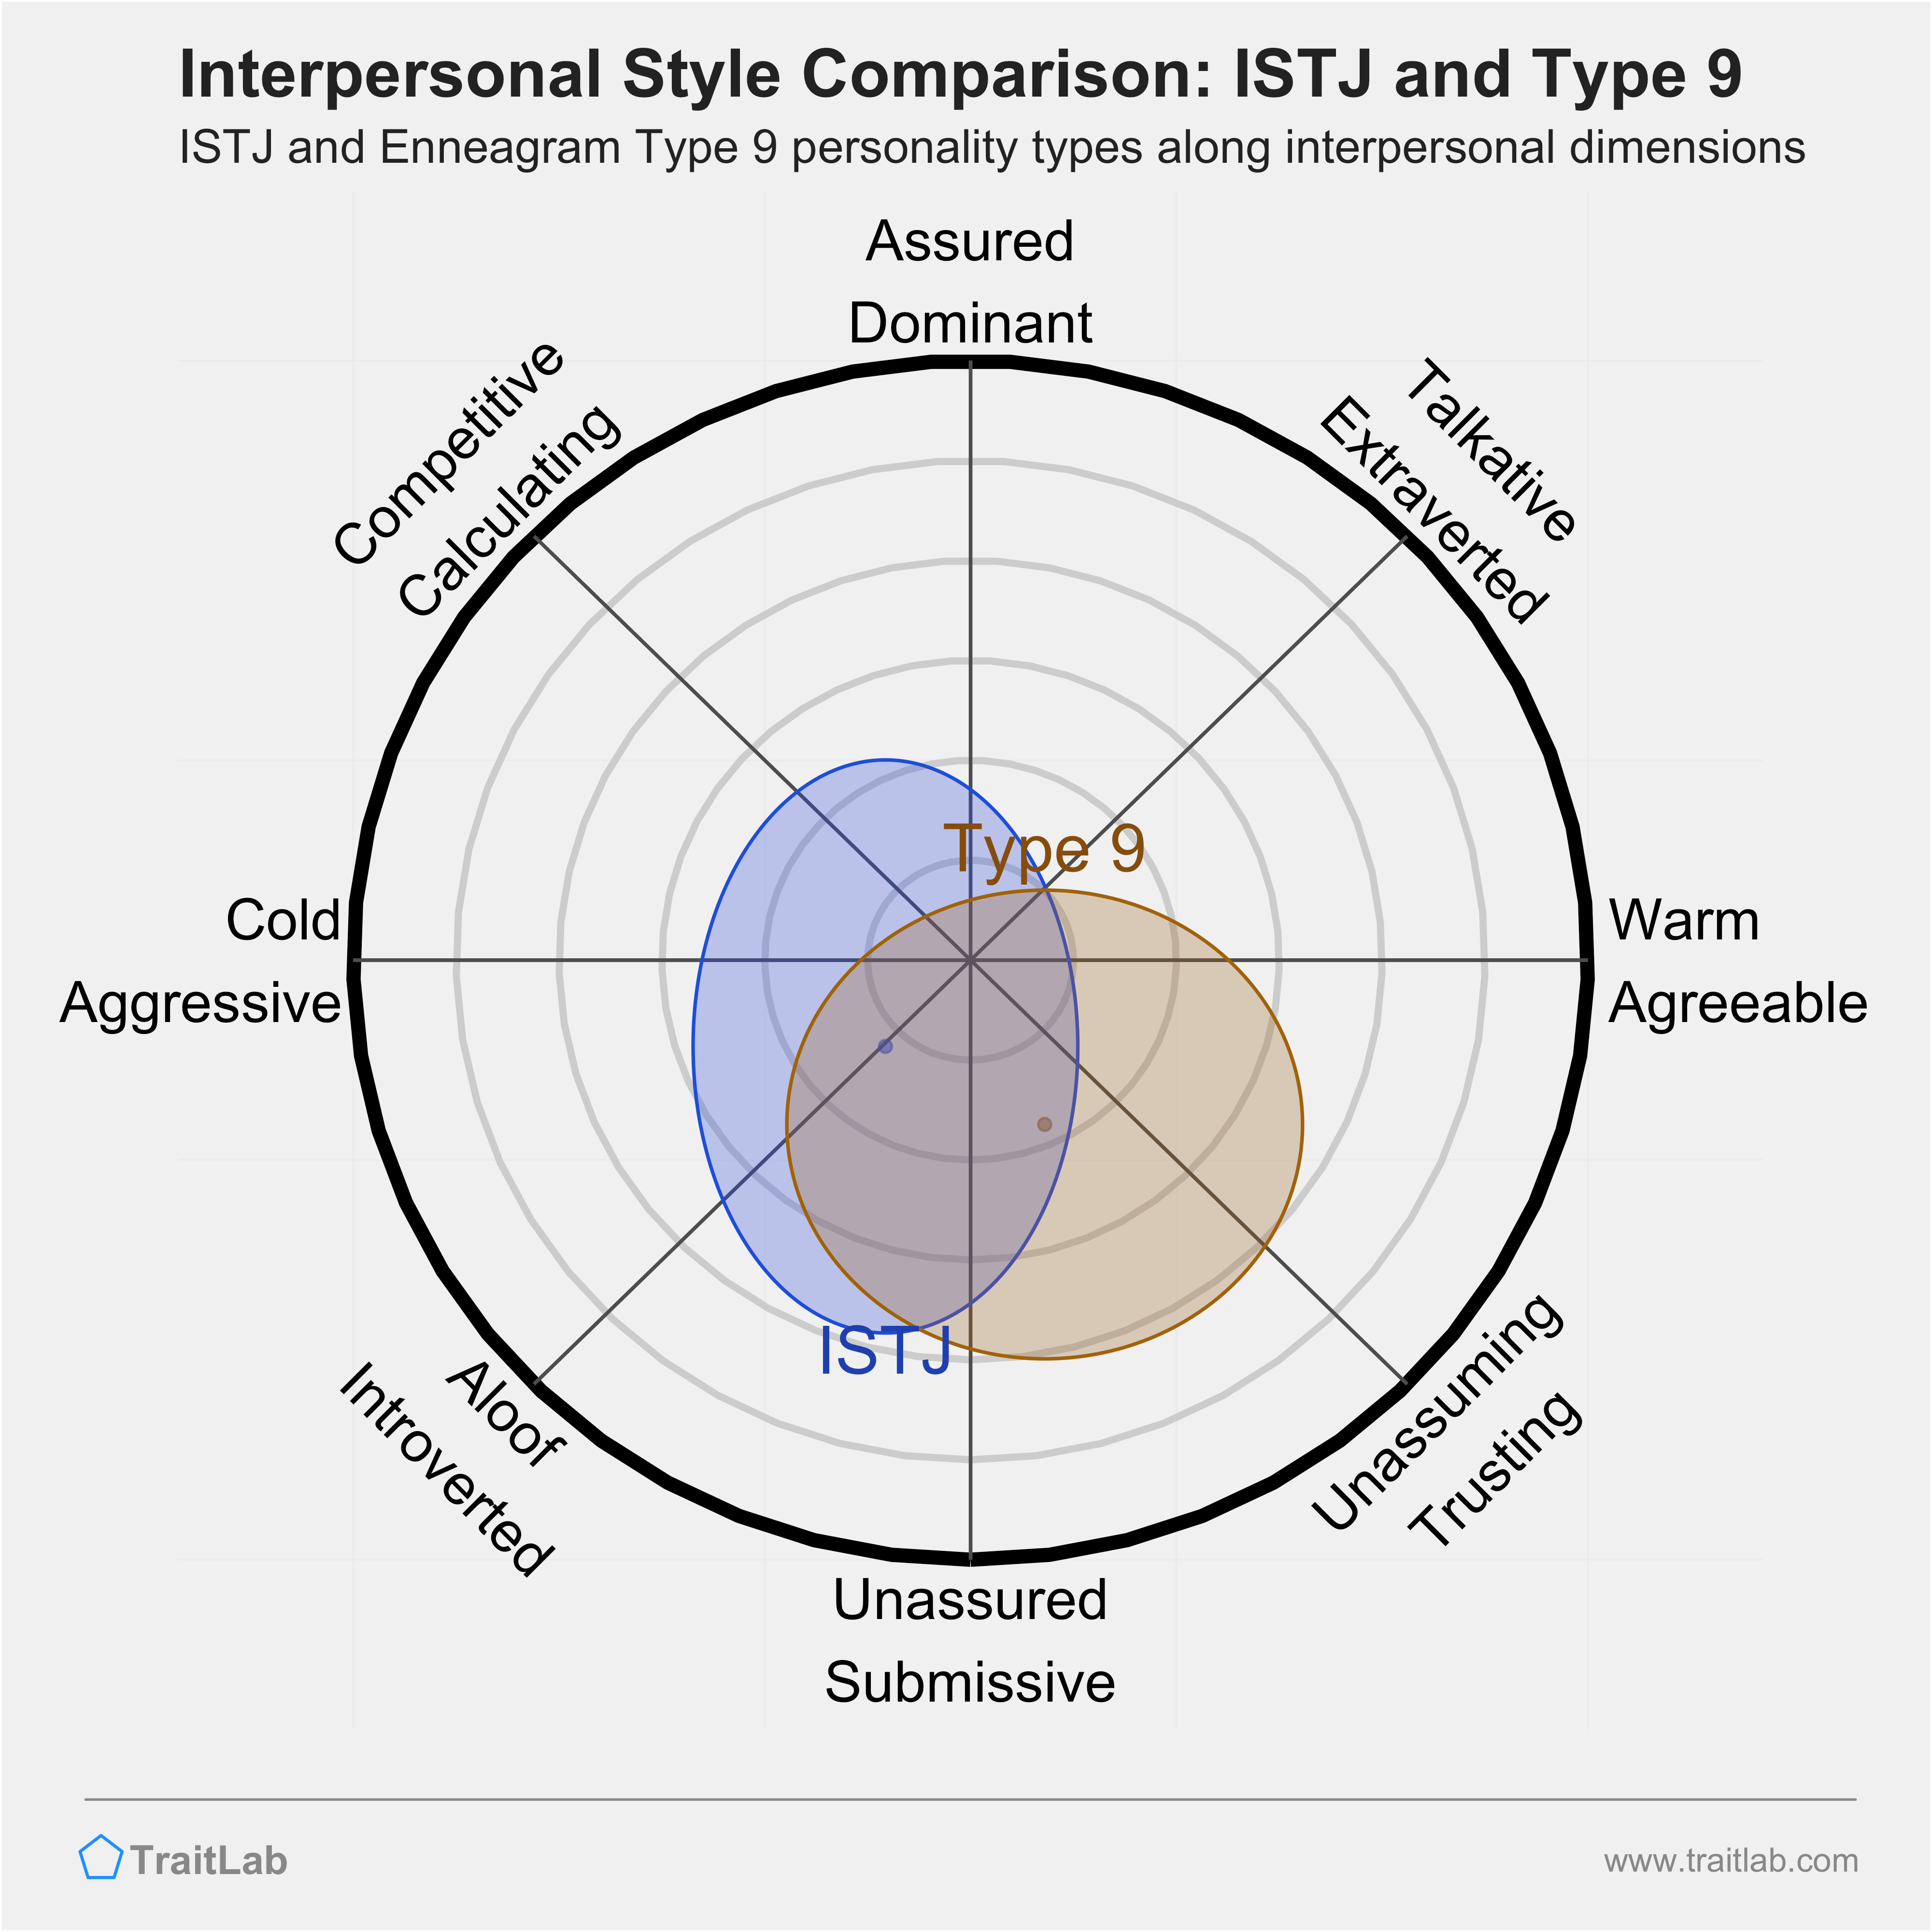 Enneagram ISTJ and Type 9 comparison across interpersonal dimensions